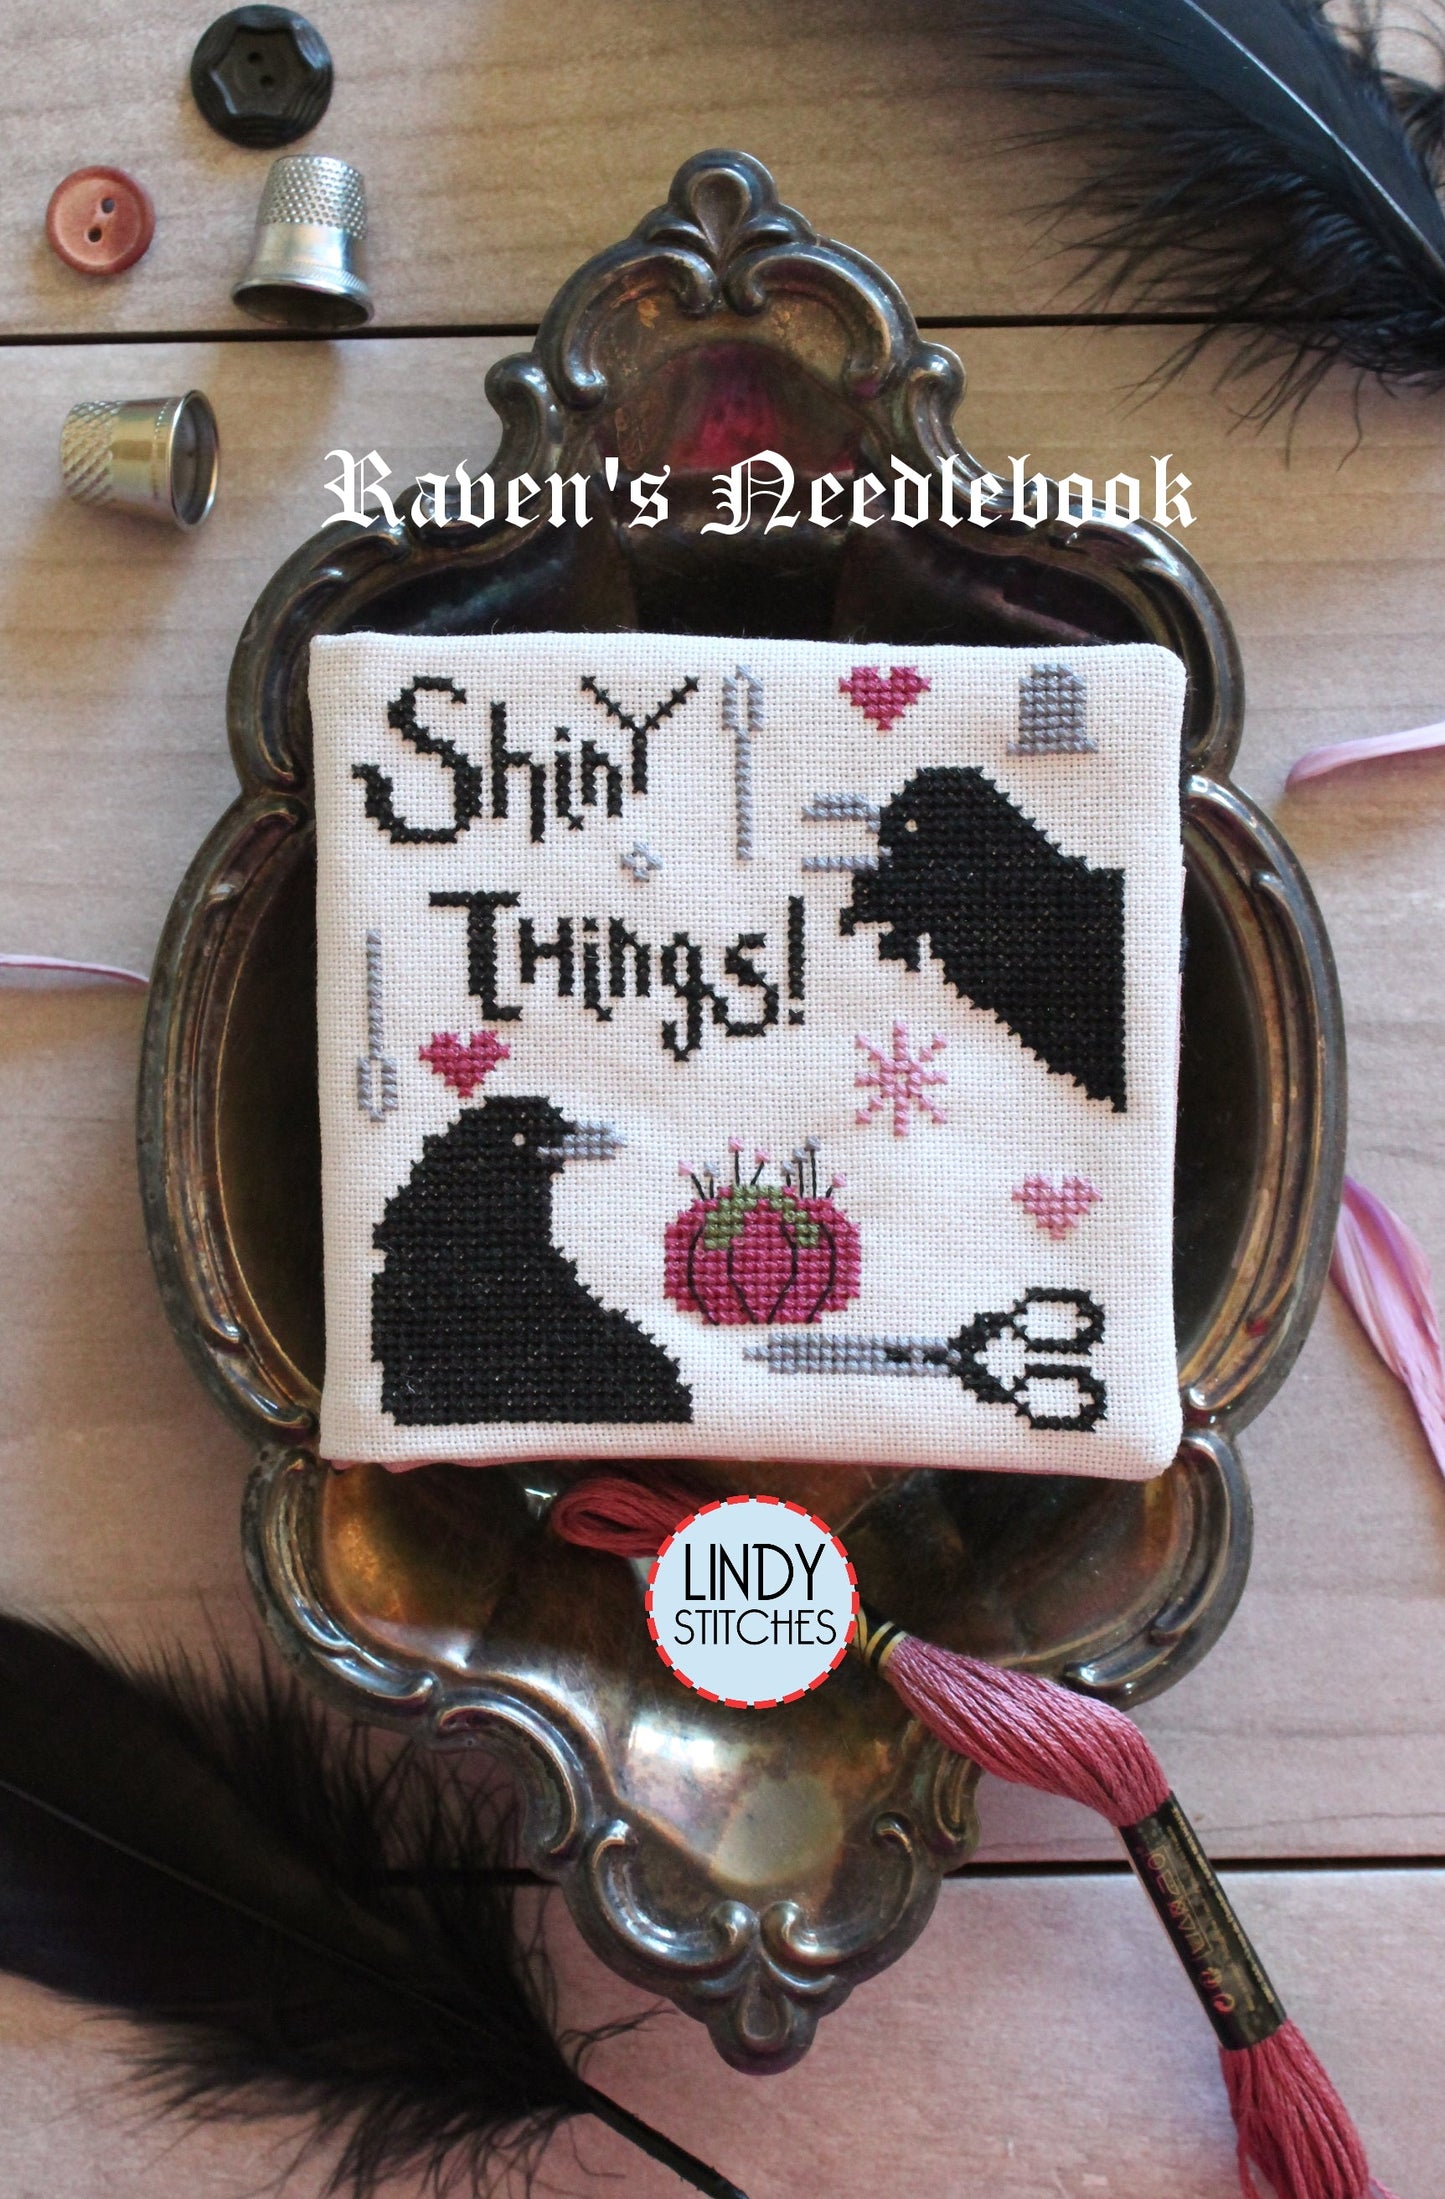 B GRADE SPOOKY BOOKS! - Six Adorably Spooky Cross Stitch Patterns by Lindy Stitches